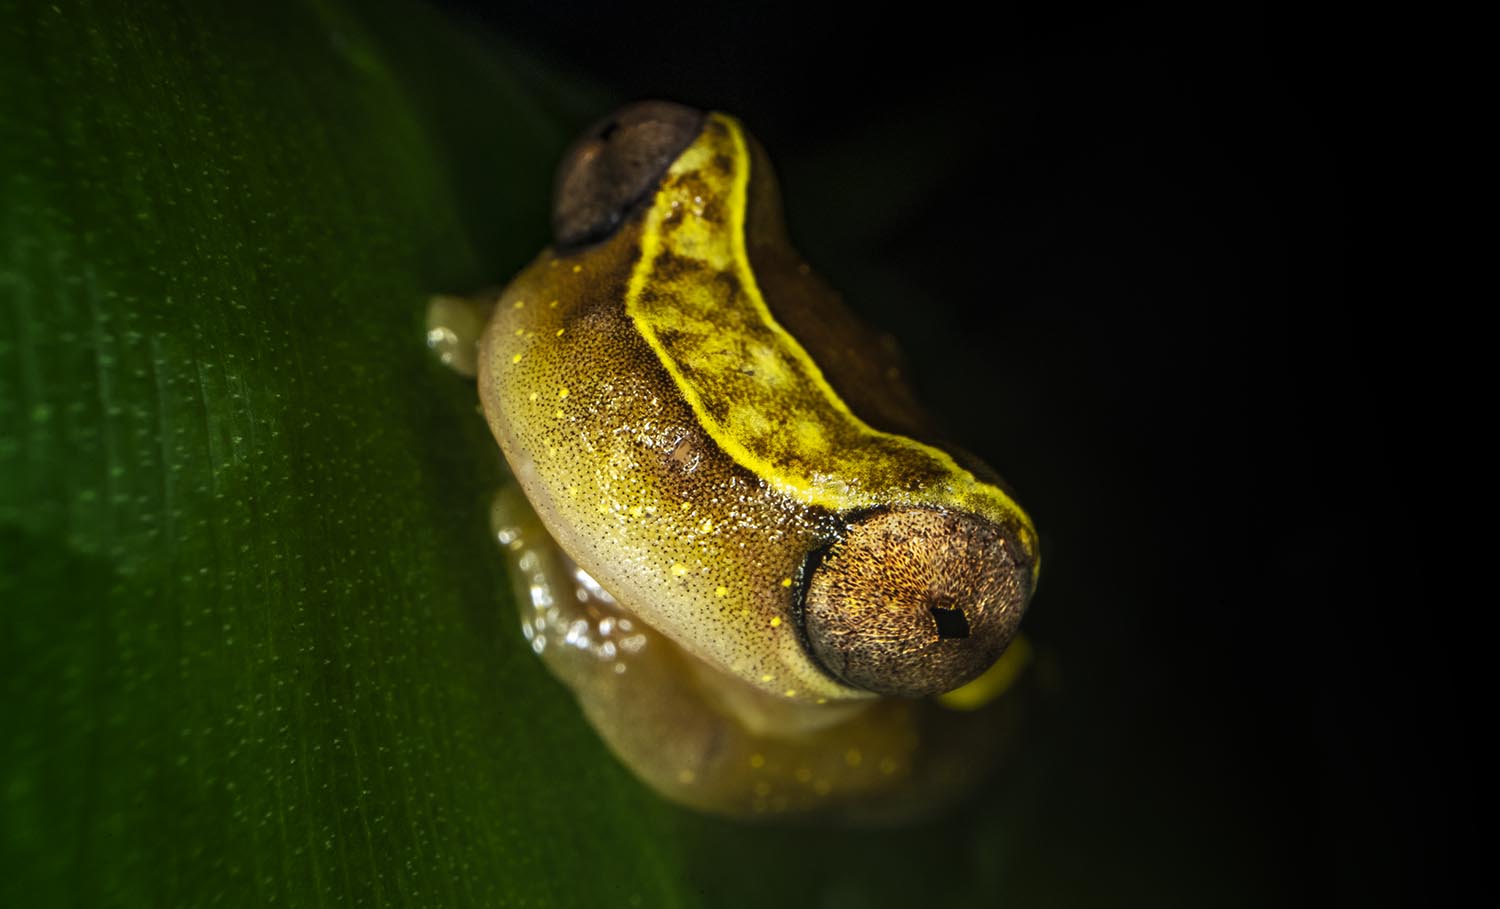 Close up of a fluorescent yellow slug